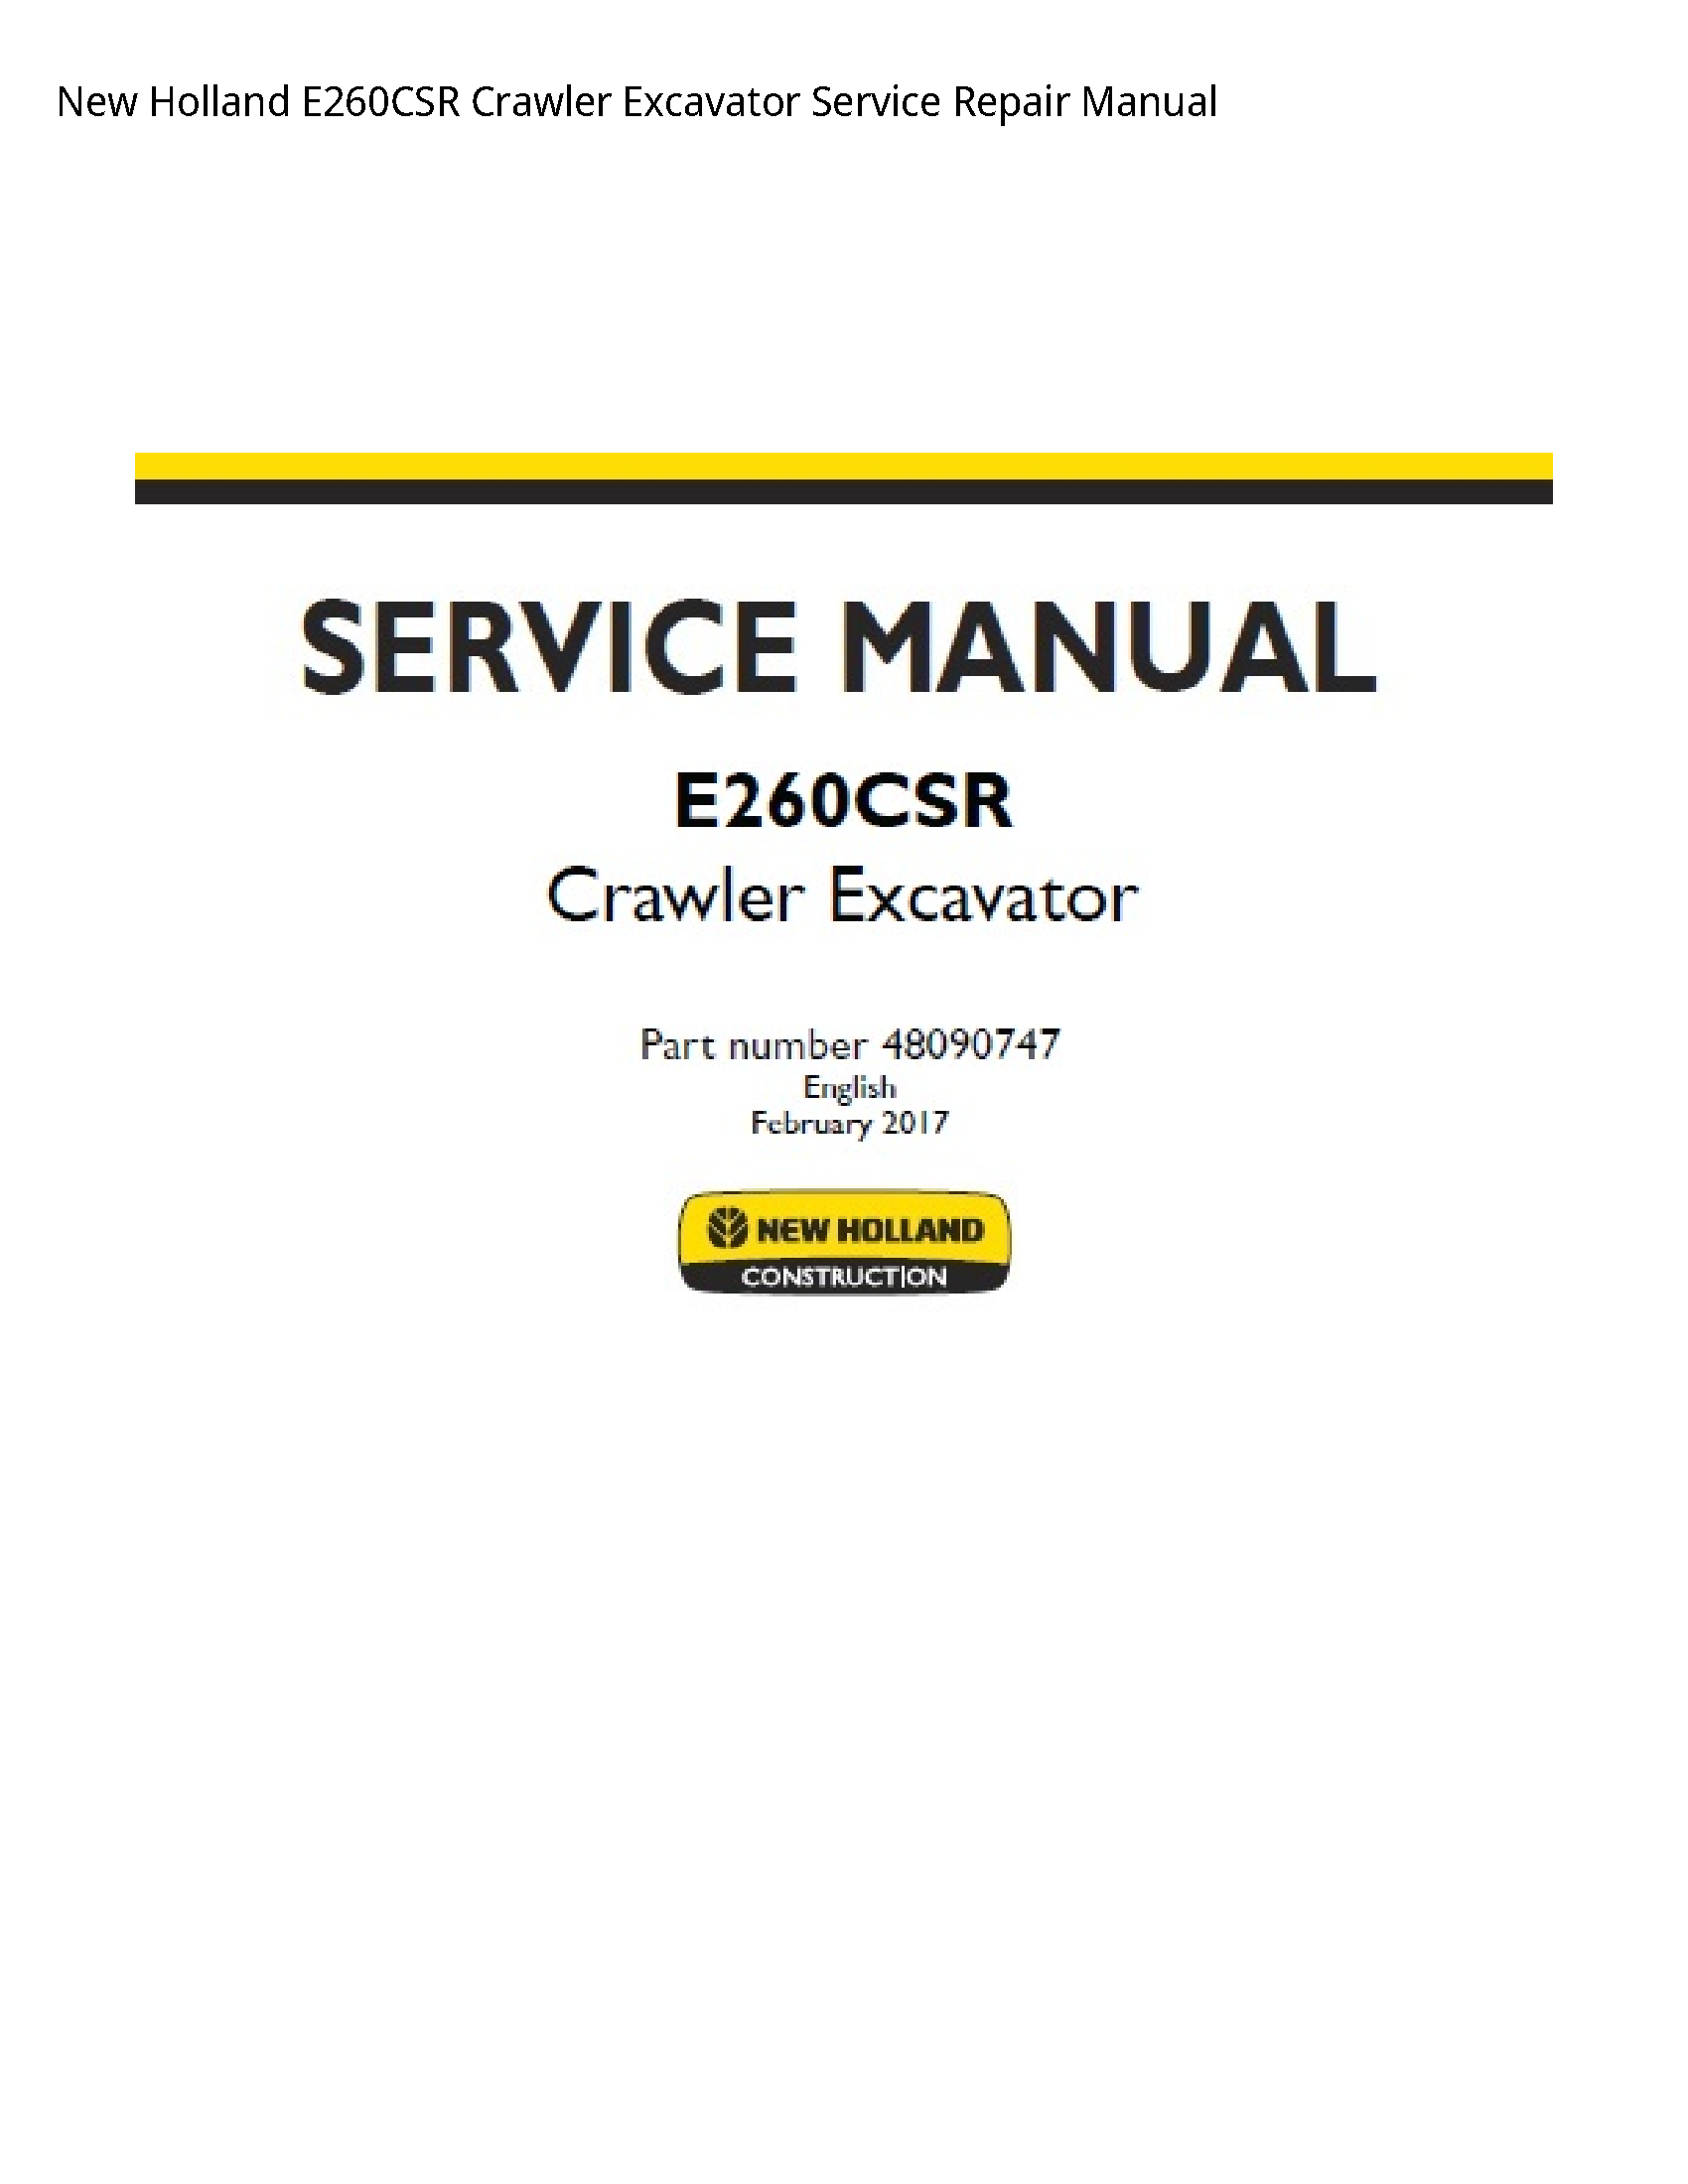 New Holland E260CSR Crawler Excavator manual